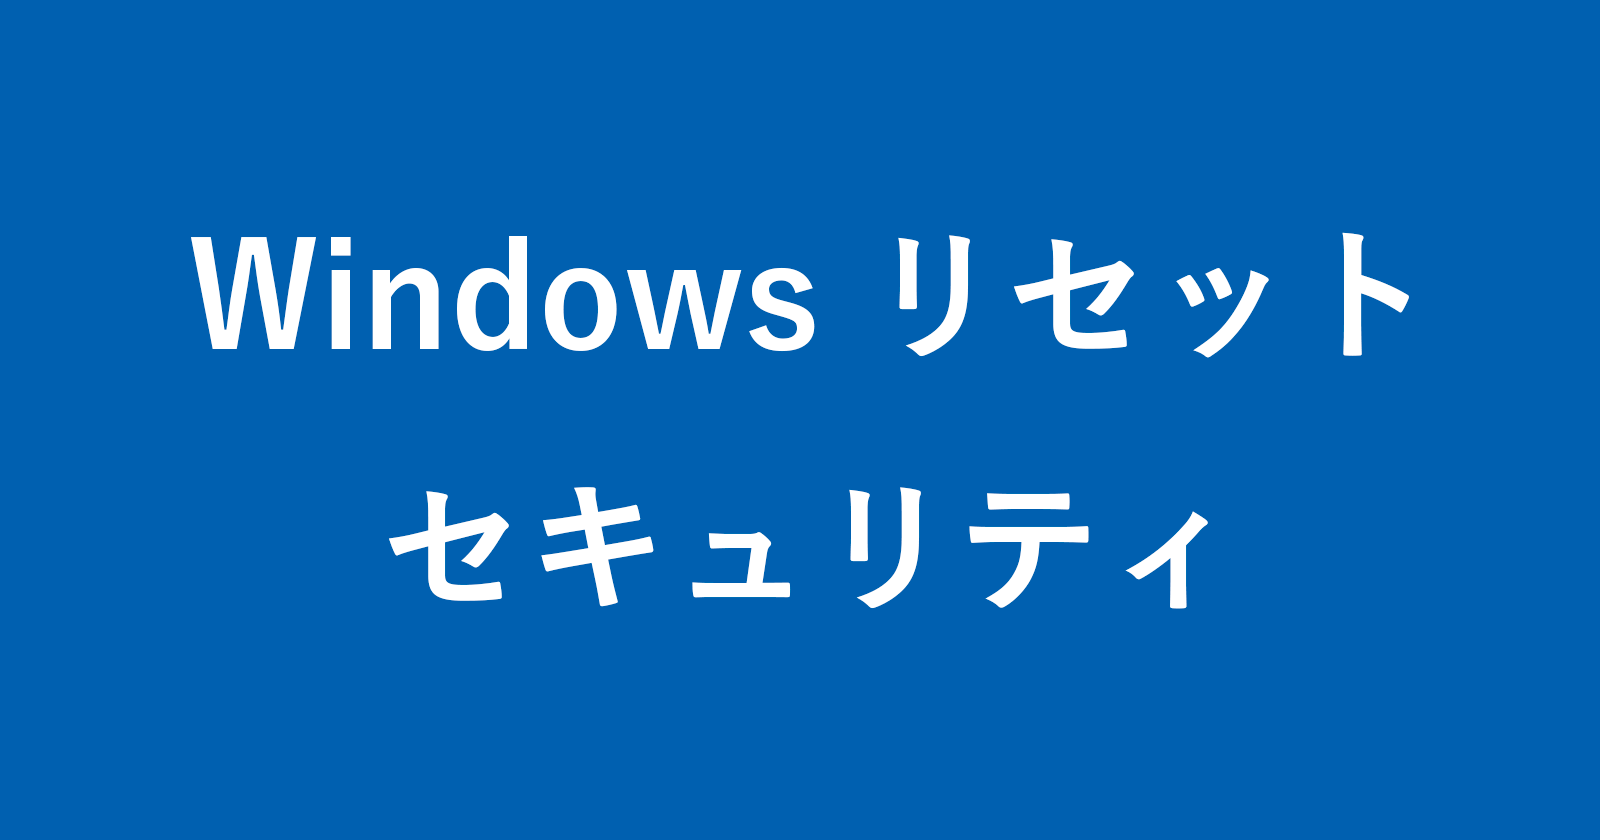 windows 11 reset windows security